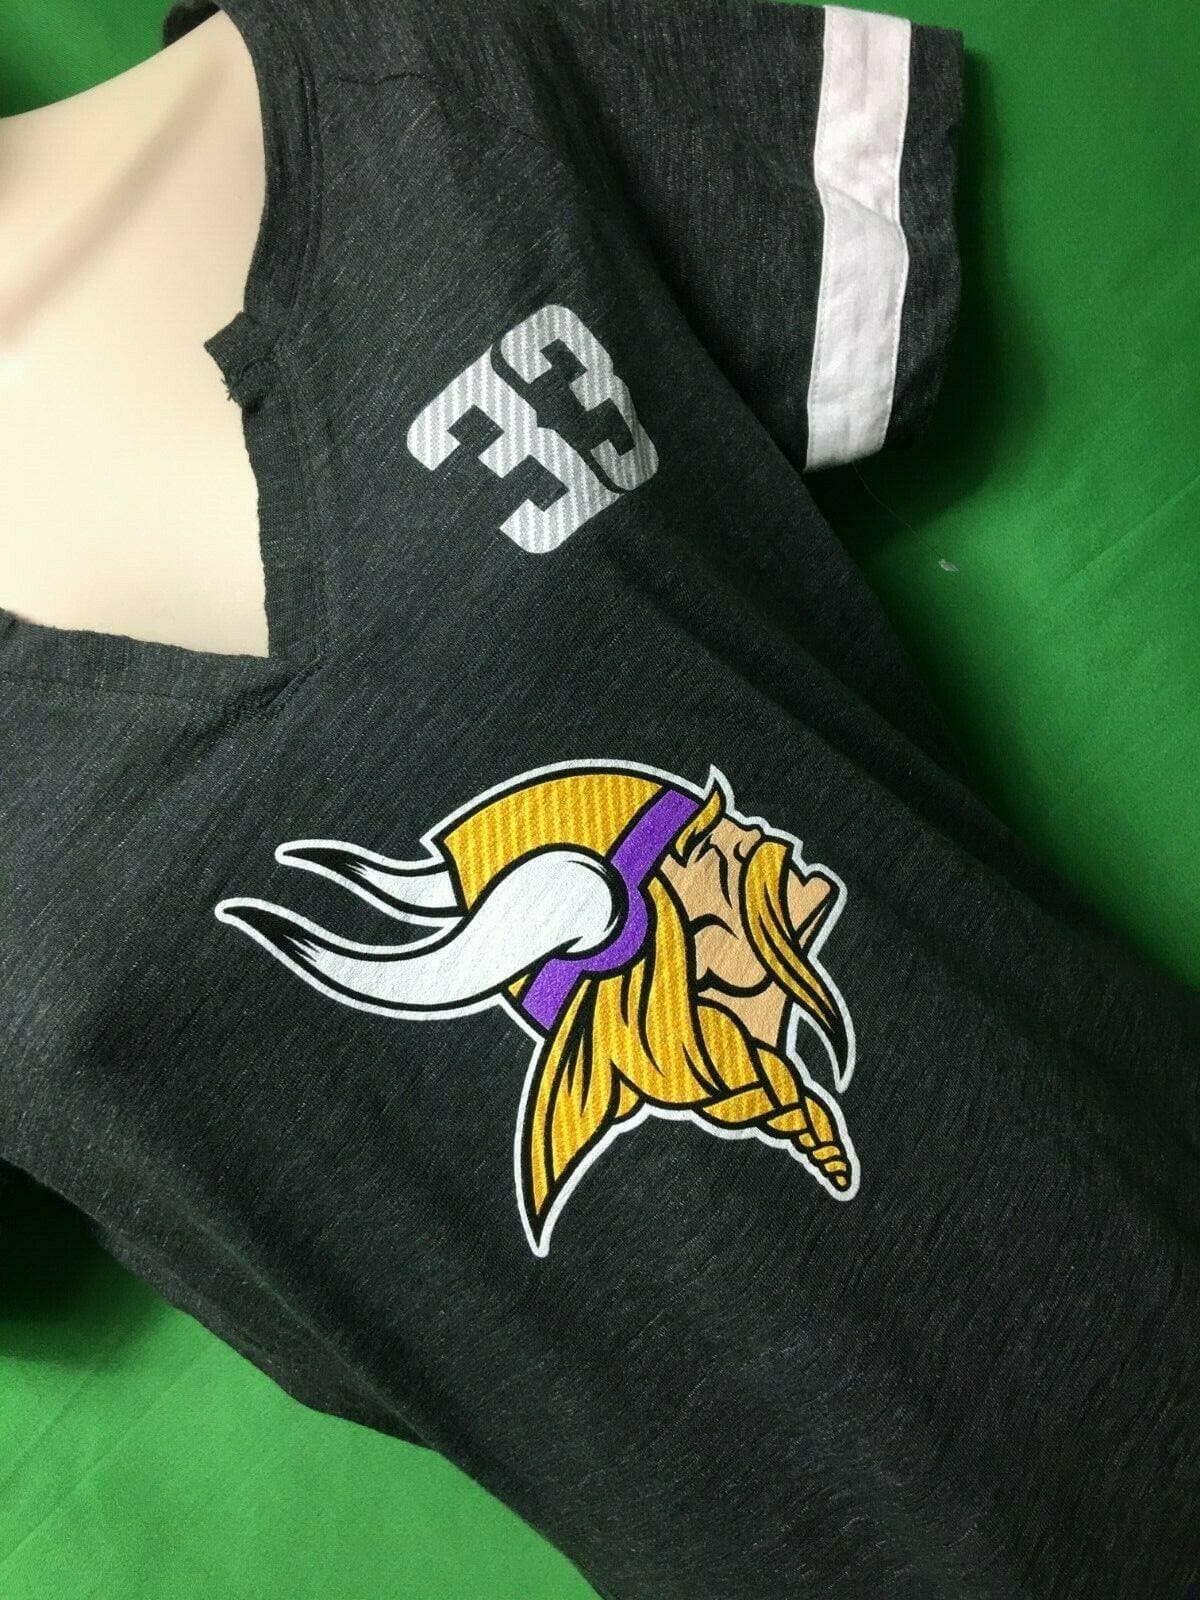 NFL Minnesota Vikings Dalvin Cook #33 Majestic T-Shirt Women's Small NWT